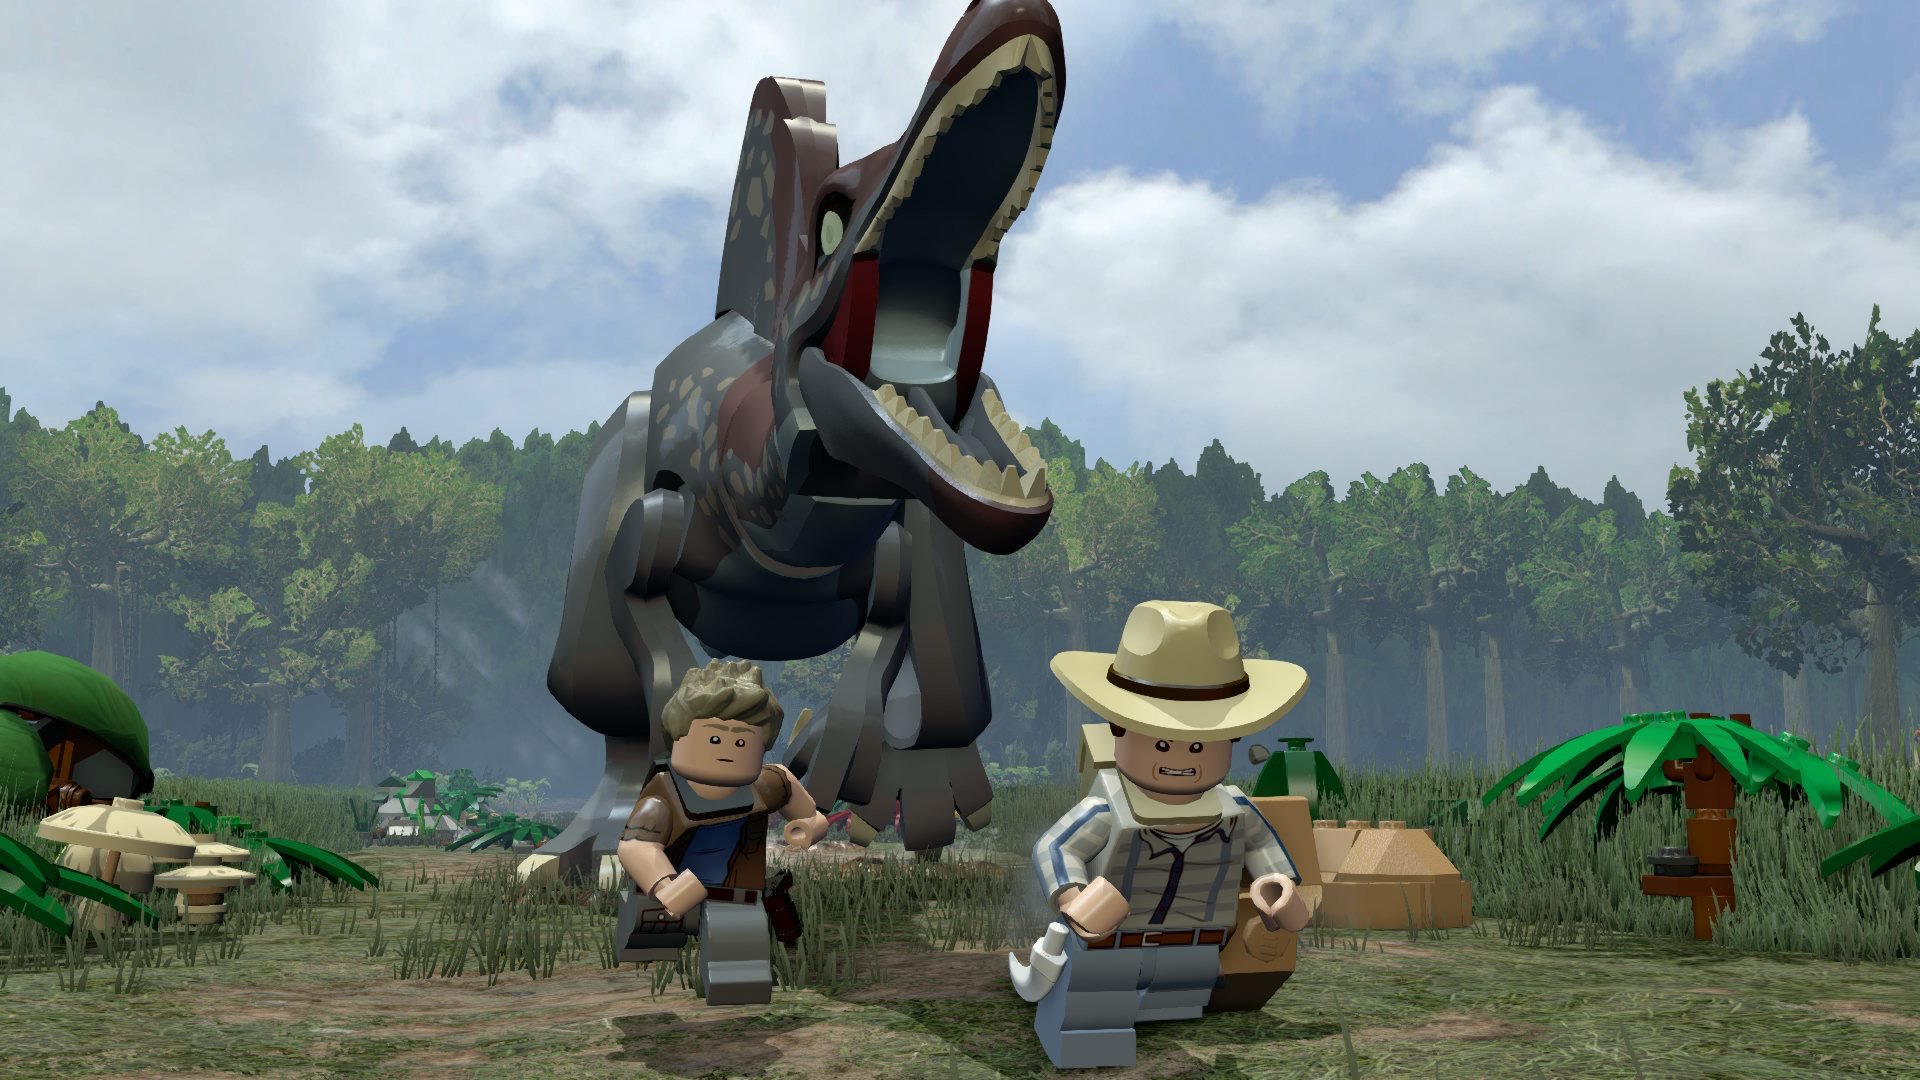 LEGO Jurassic World 5